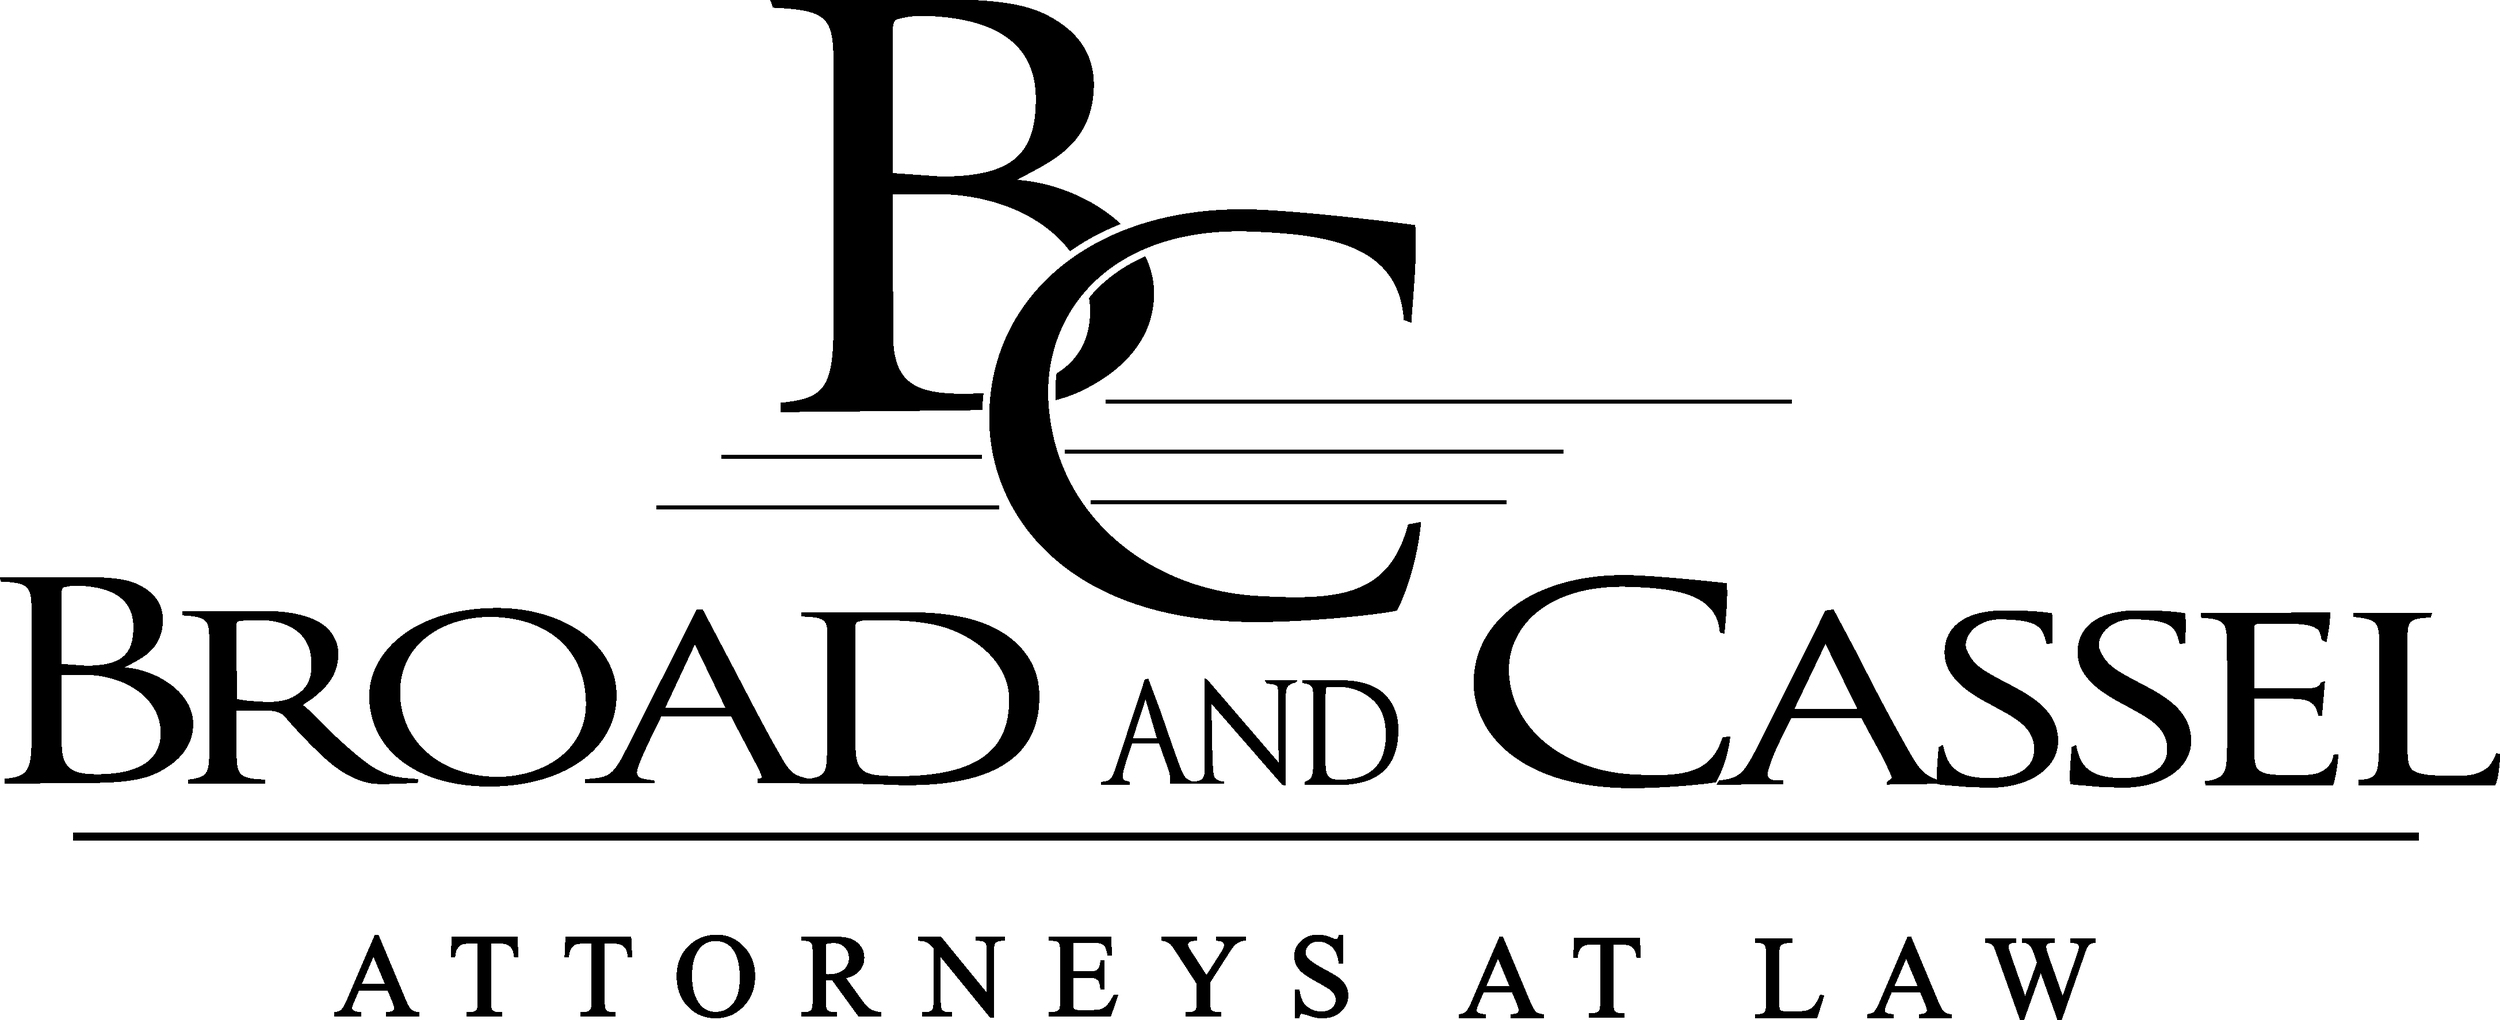 2011 Broad and Cassel Logo.jpg